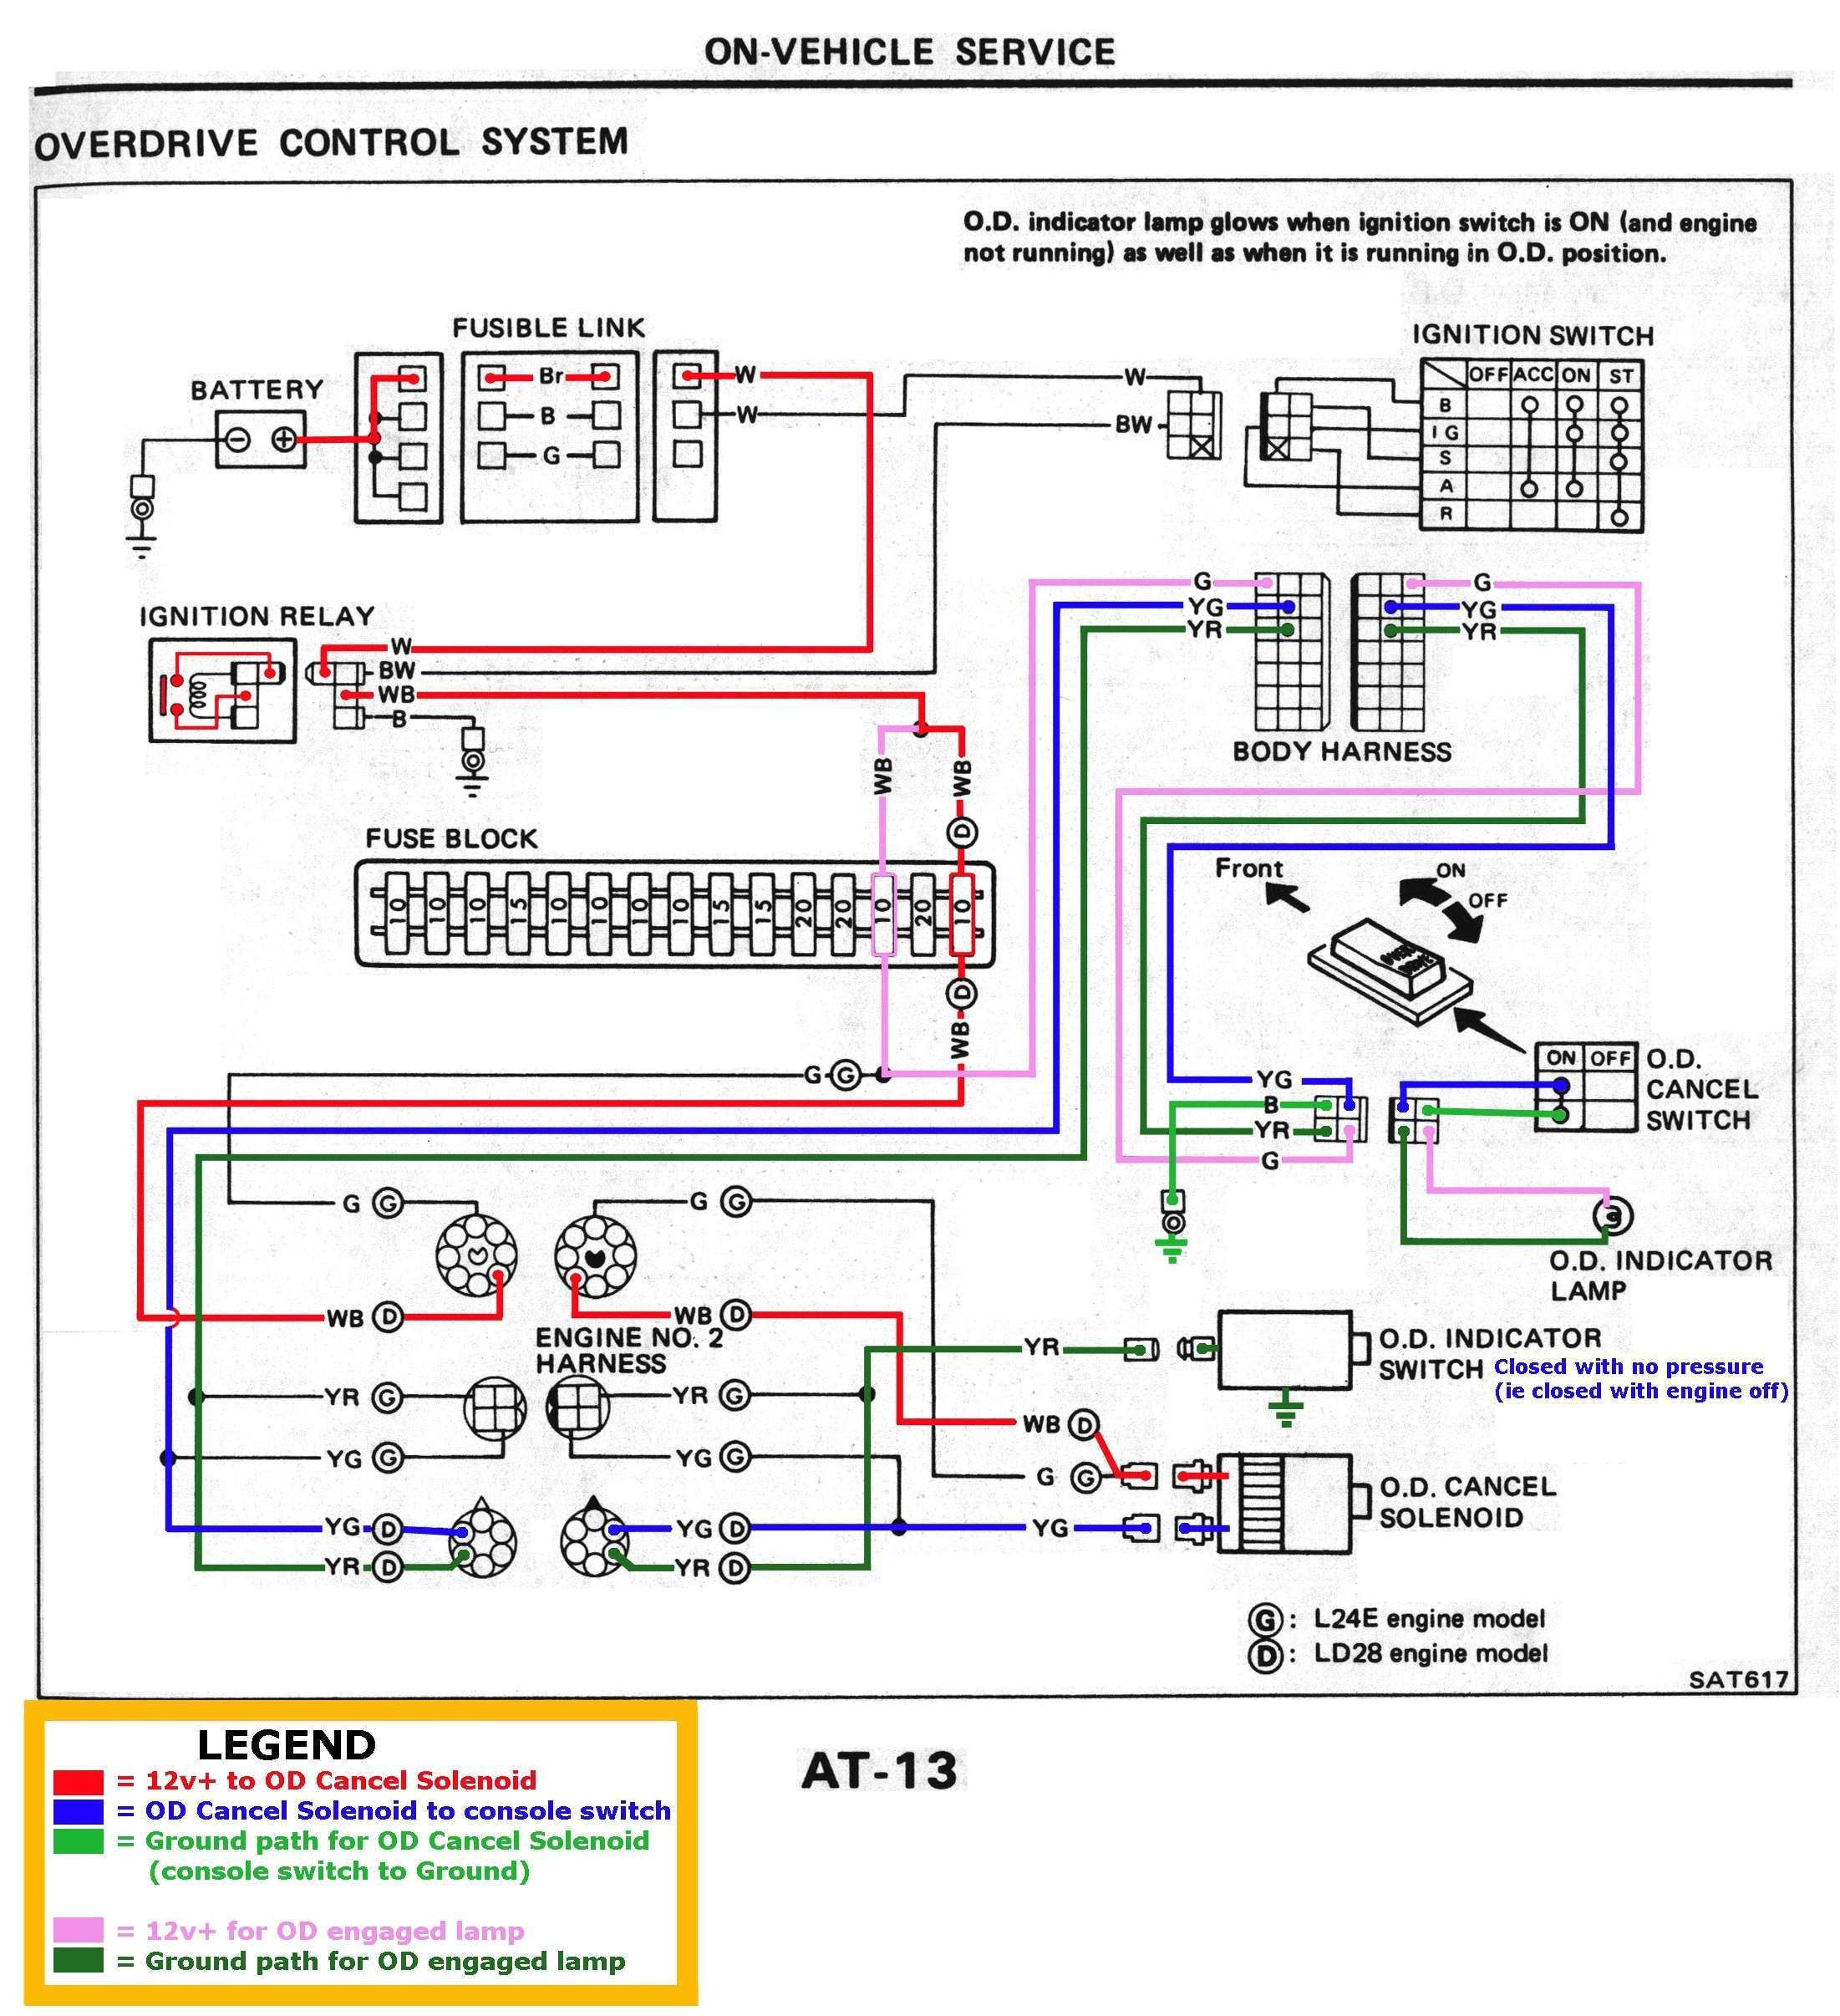 Allison 3000 Wiring Diagram Allison 740 Transmission Wiring Diagrams Wiring Diagram Split